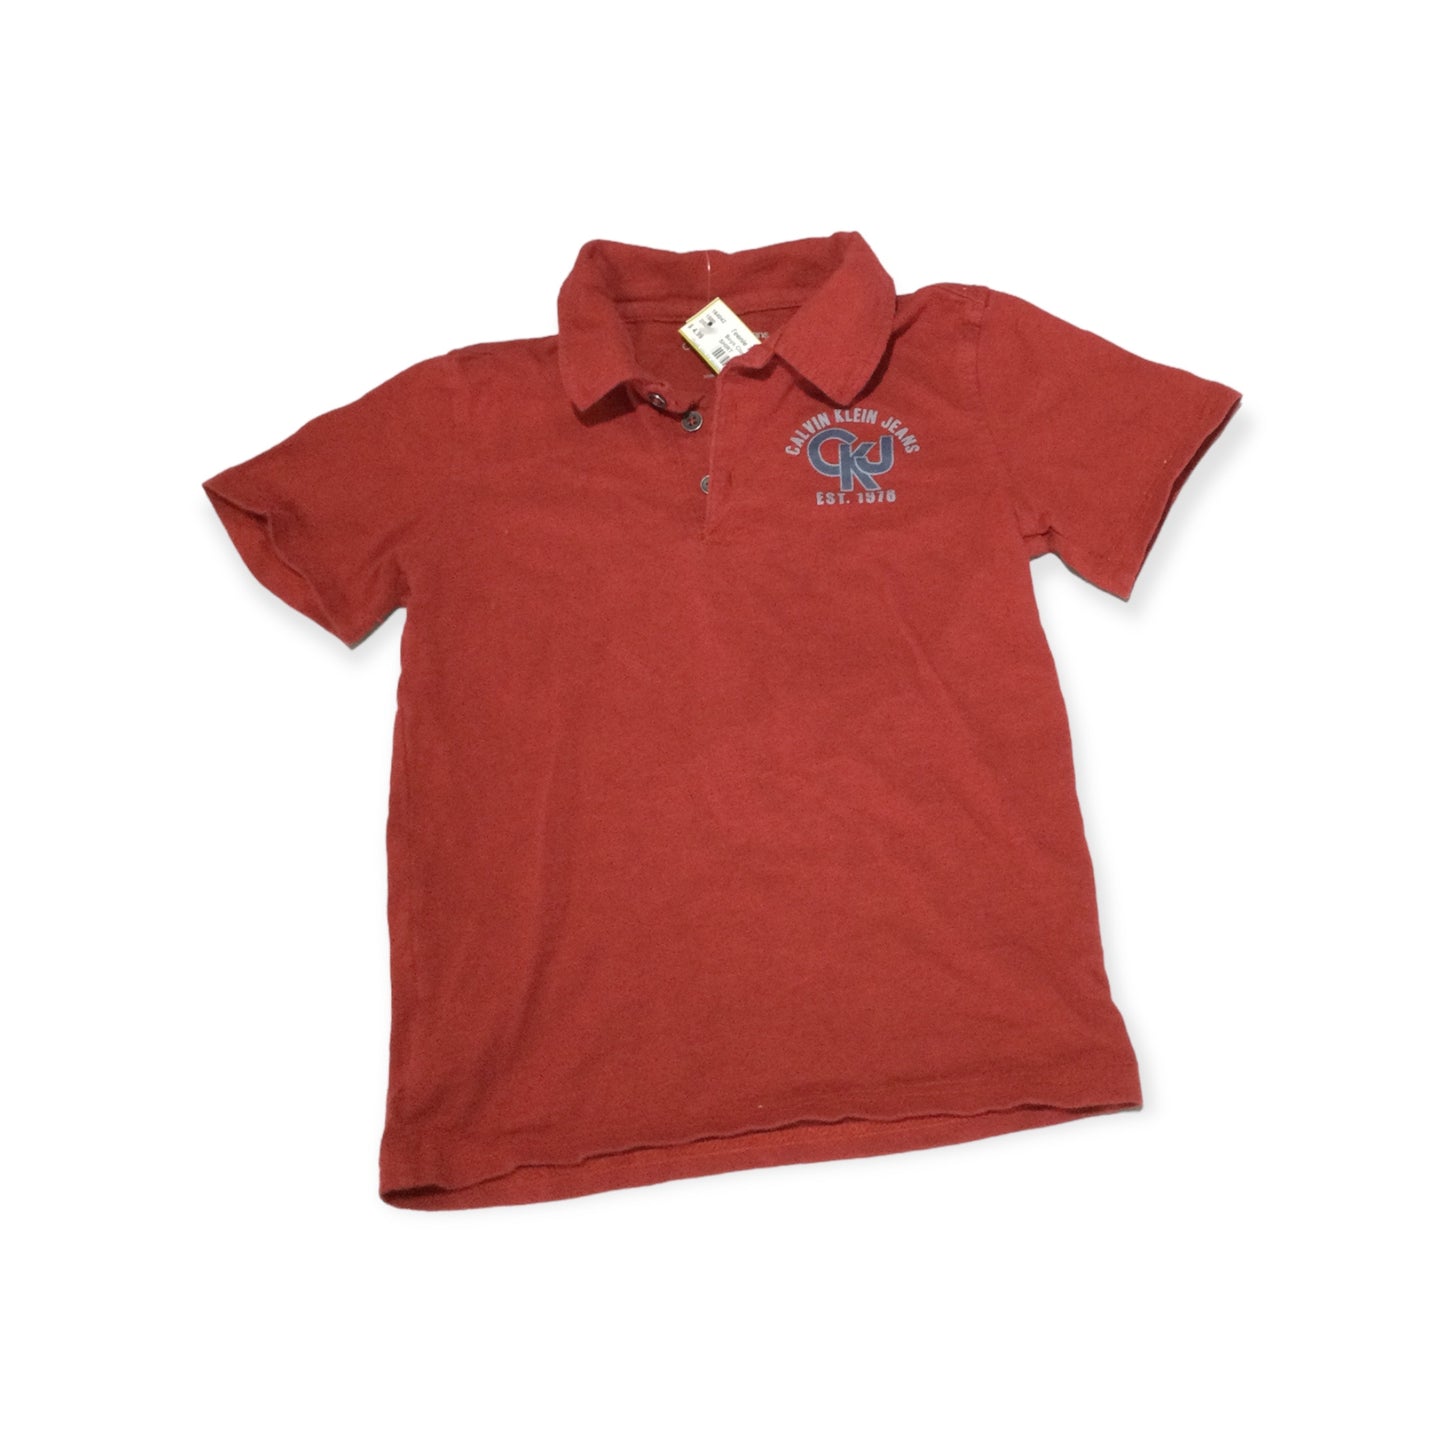 CKJ red shirt size 7